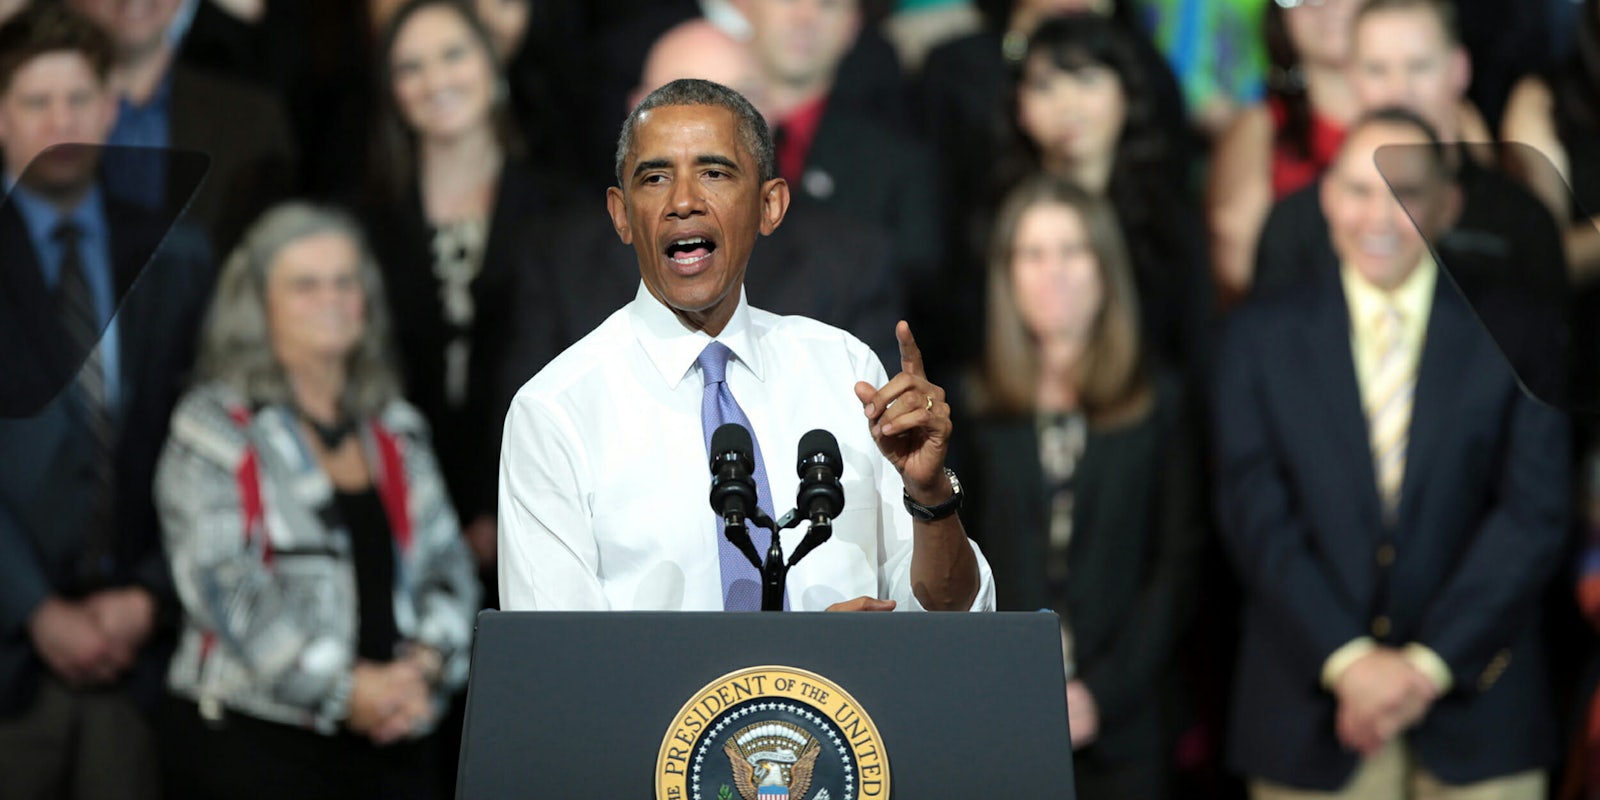 Barack Obama is returning to politics to stump for gubernatorial candidates in NJ and VA.